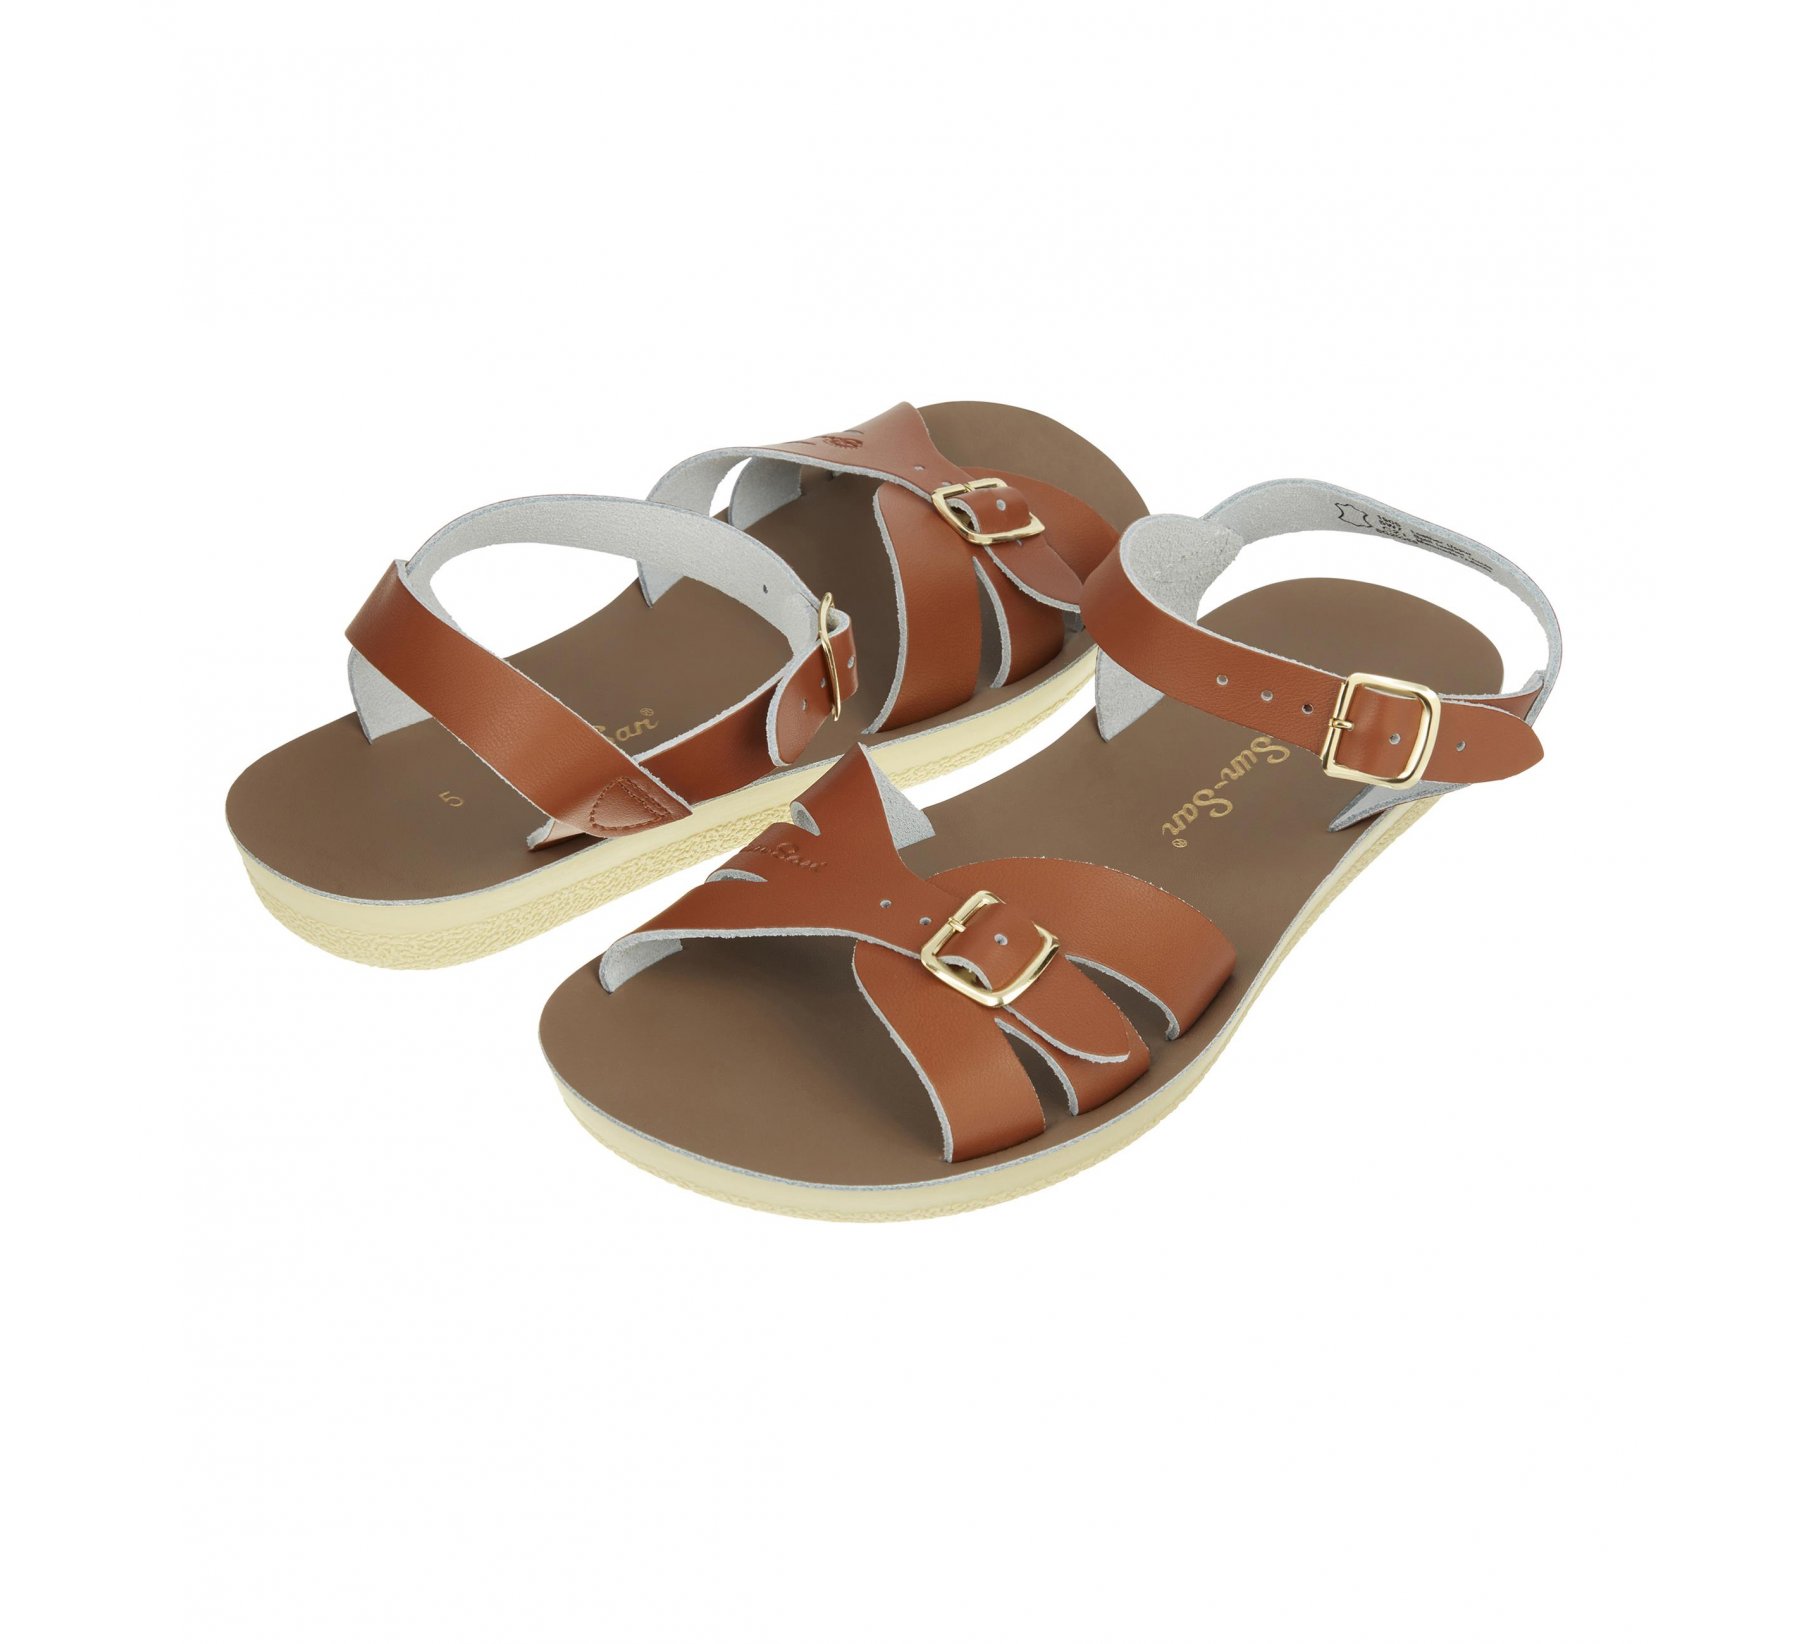 Boardwalk Tan Sandal - Salt Water Sandals